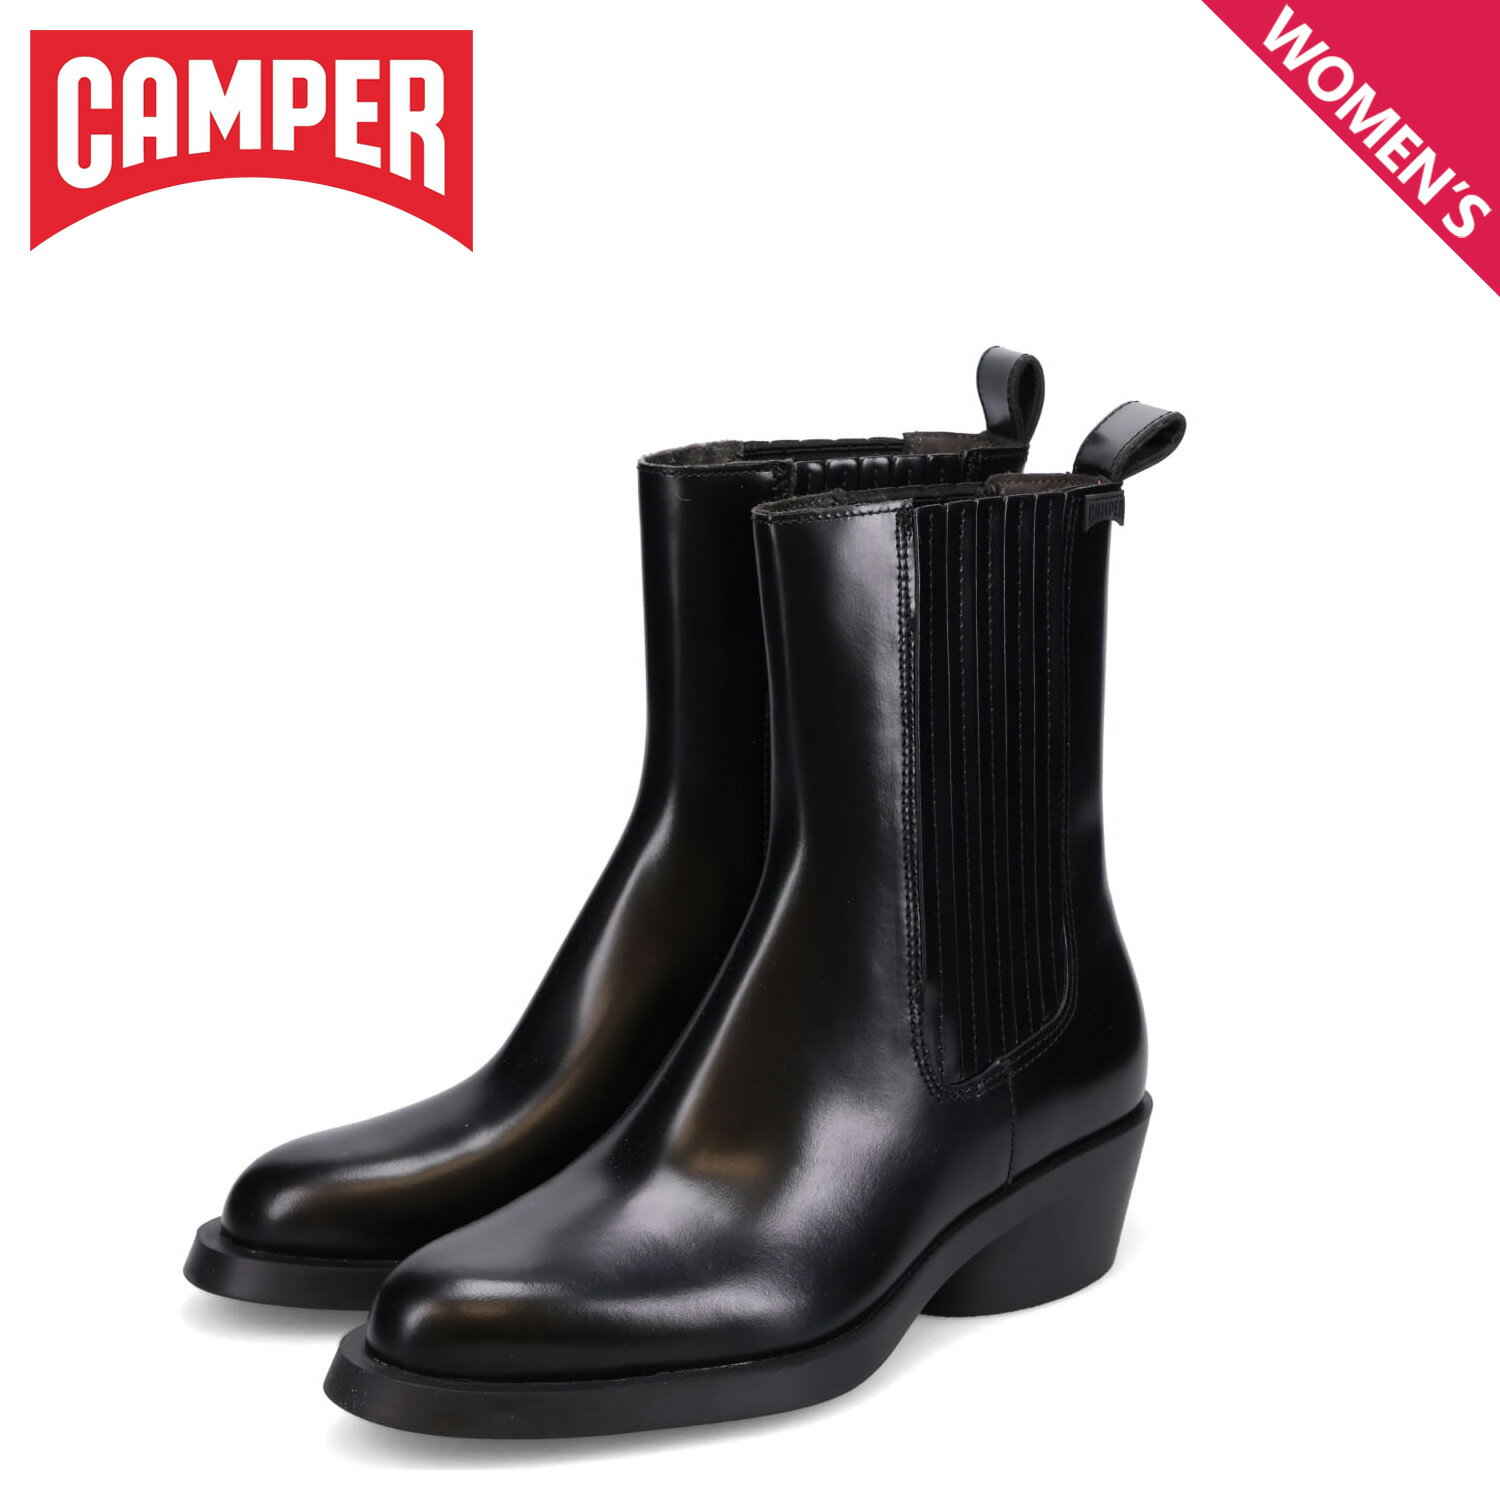 CAMPER BONNIE カンペール ブーツ 靴 アンクルブーツ ボニー レディース ブラック 黒 K400631